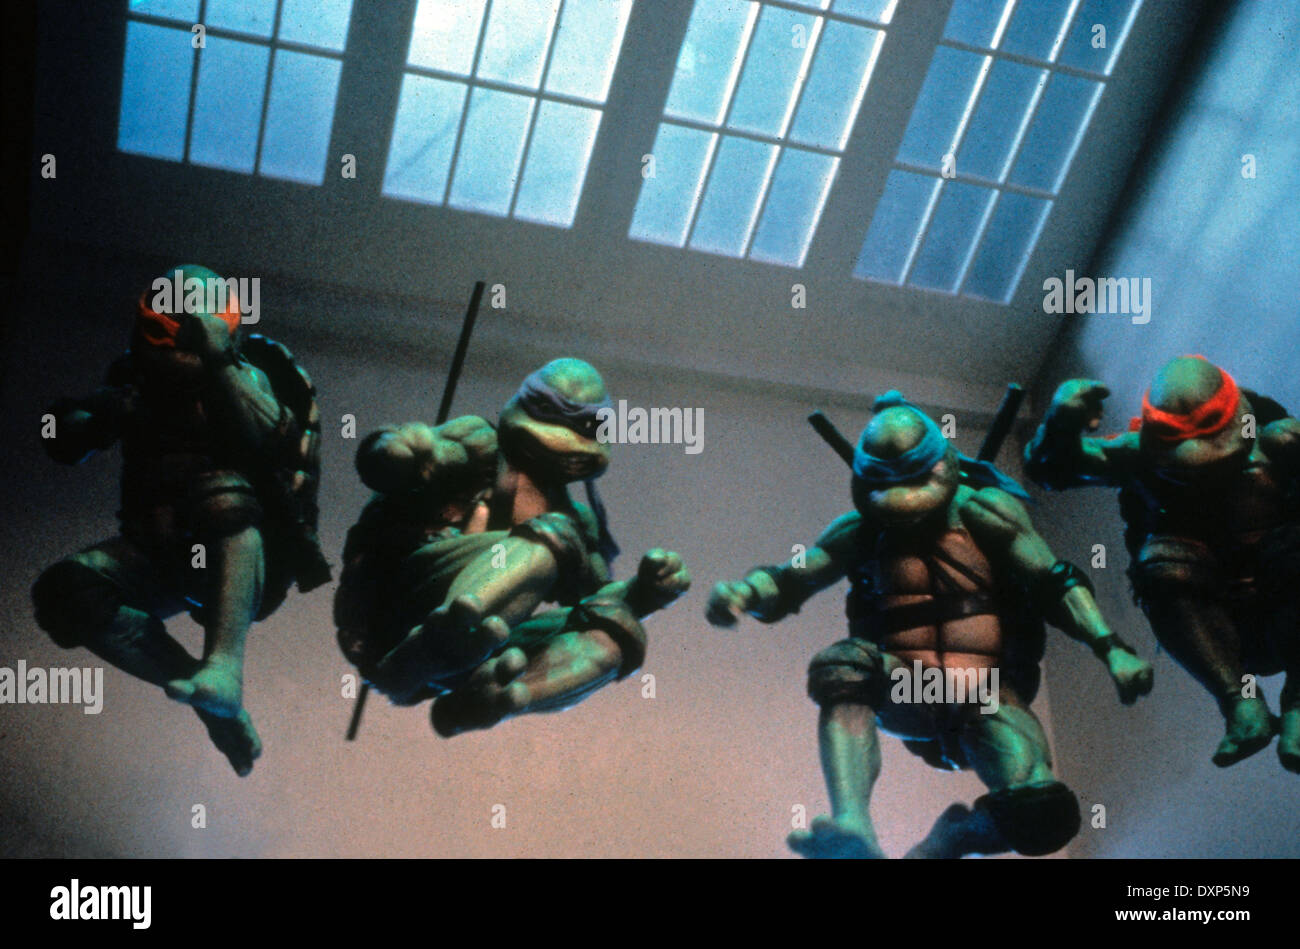 https://c8.alamy.com/comp/DXP5N9/teenage-mutant-ninja-turtles-DXP5N9.jpg